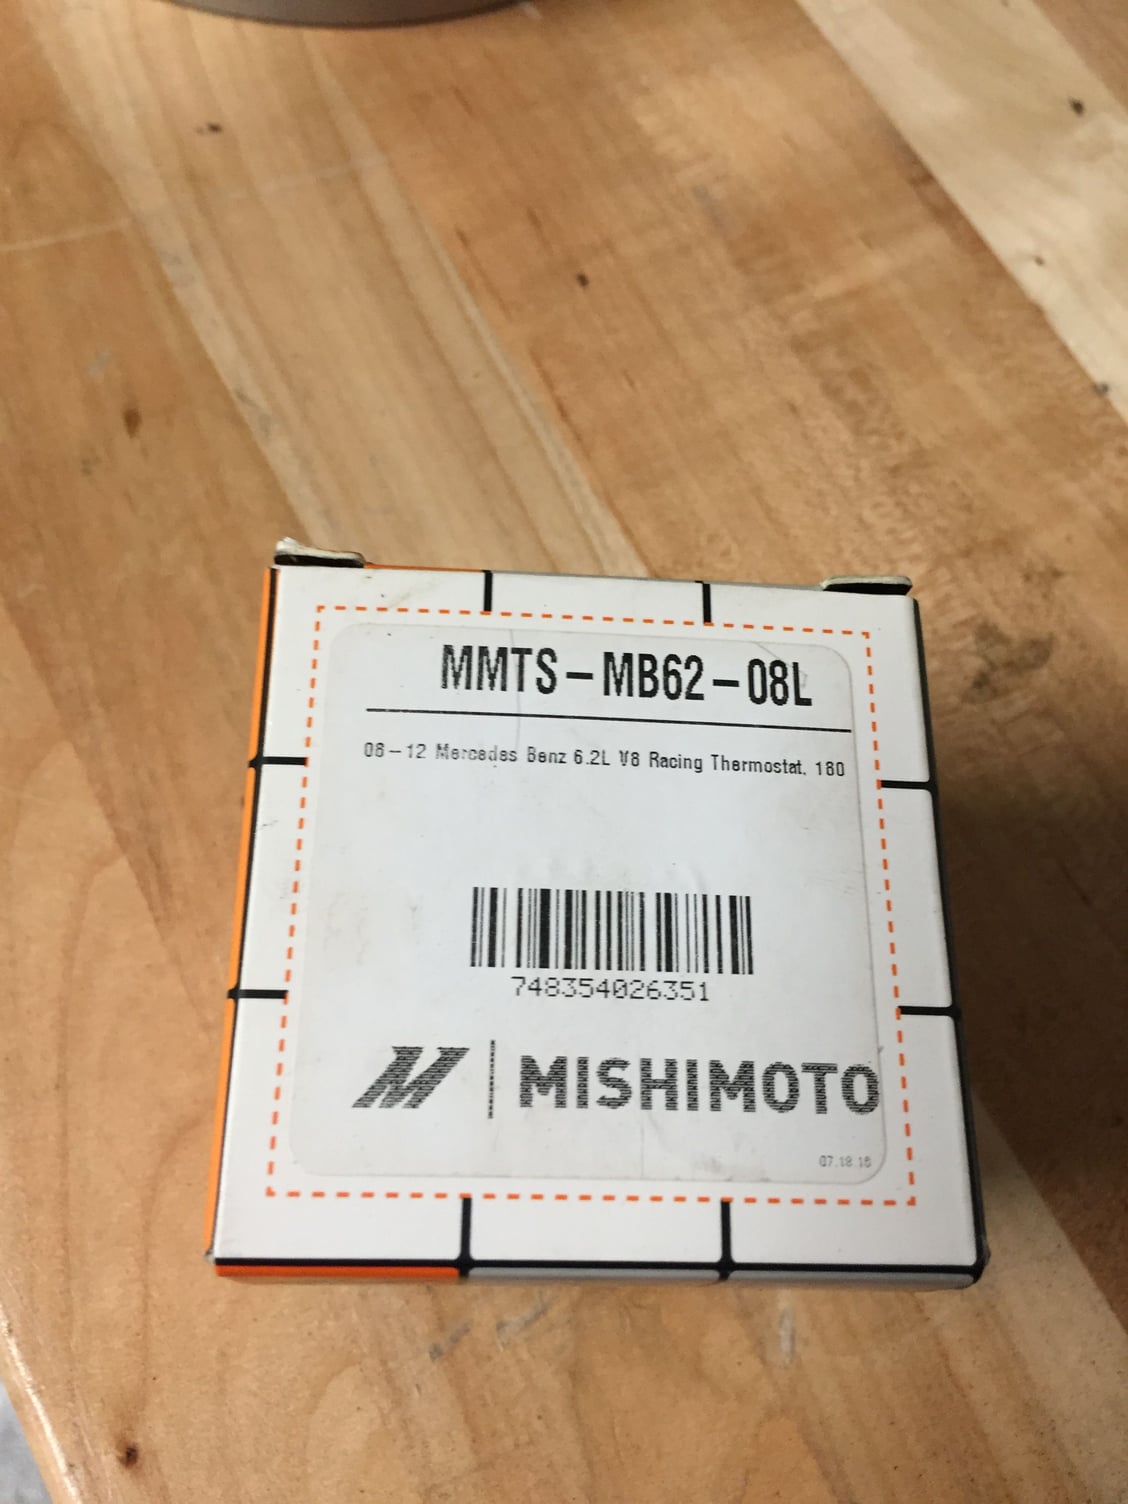 Engine - Internals - M156 / C63 Mishimoto 180 degree thermostat ( new in box) - New - Houston, TX 77056, United States